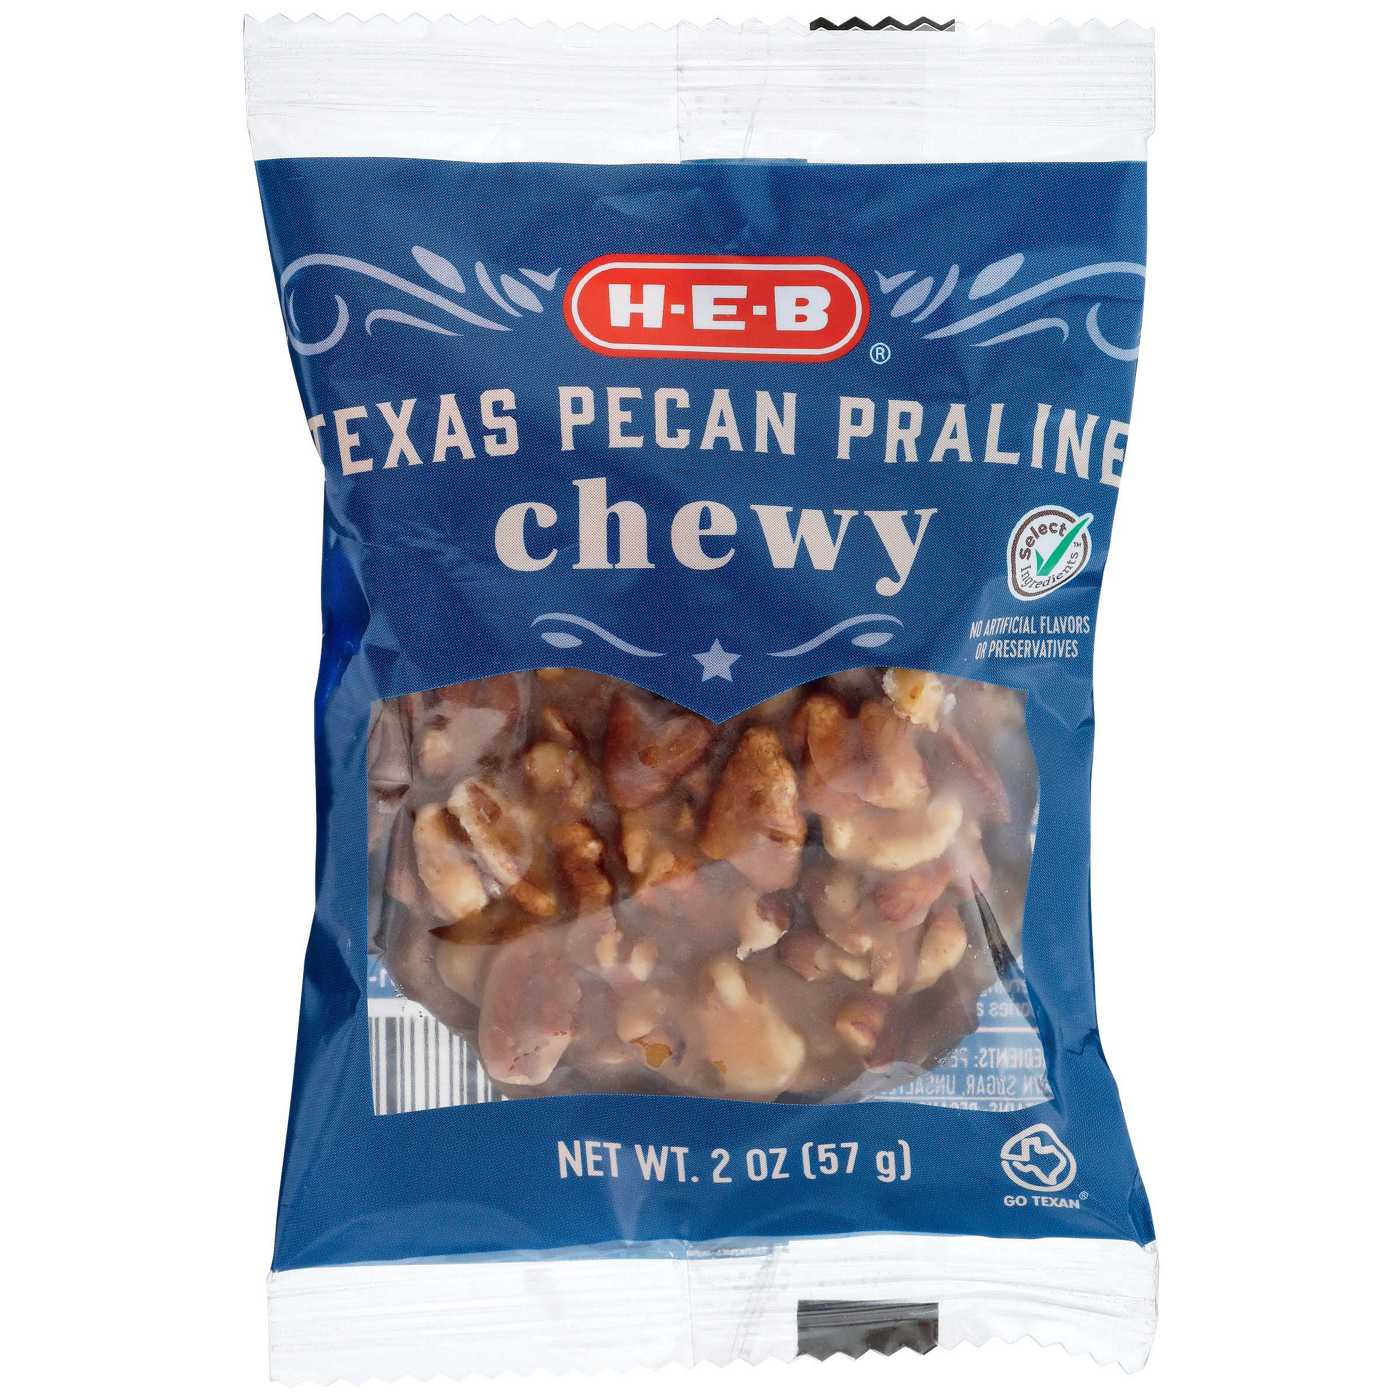 H-E-B Texas Pecan Praline - Chewy; image 1 of 2